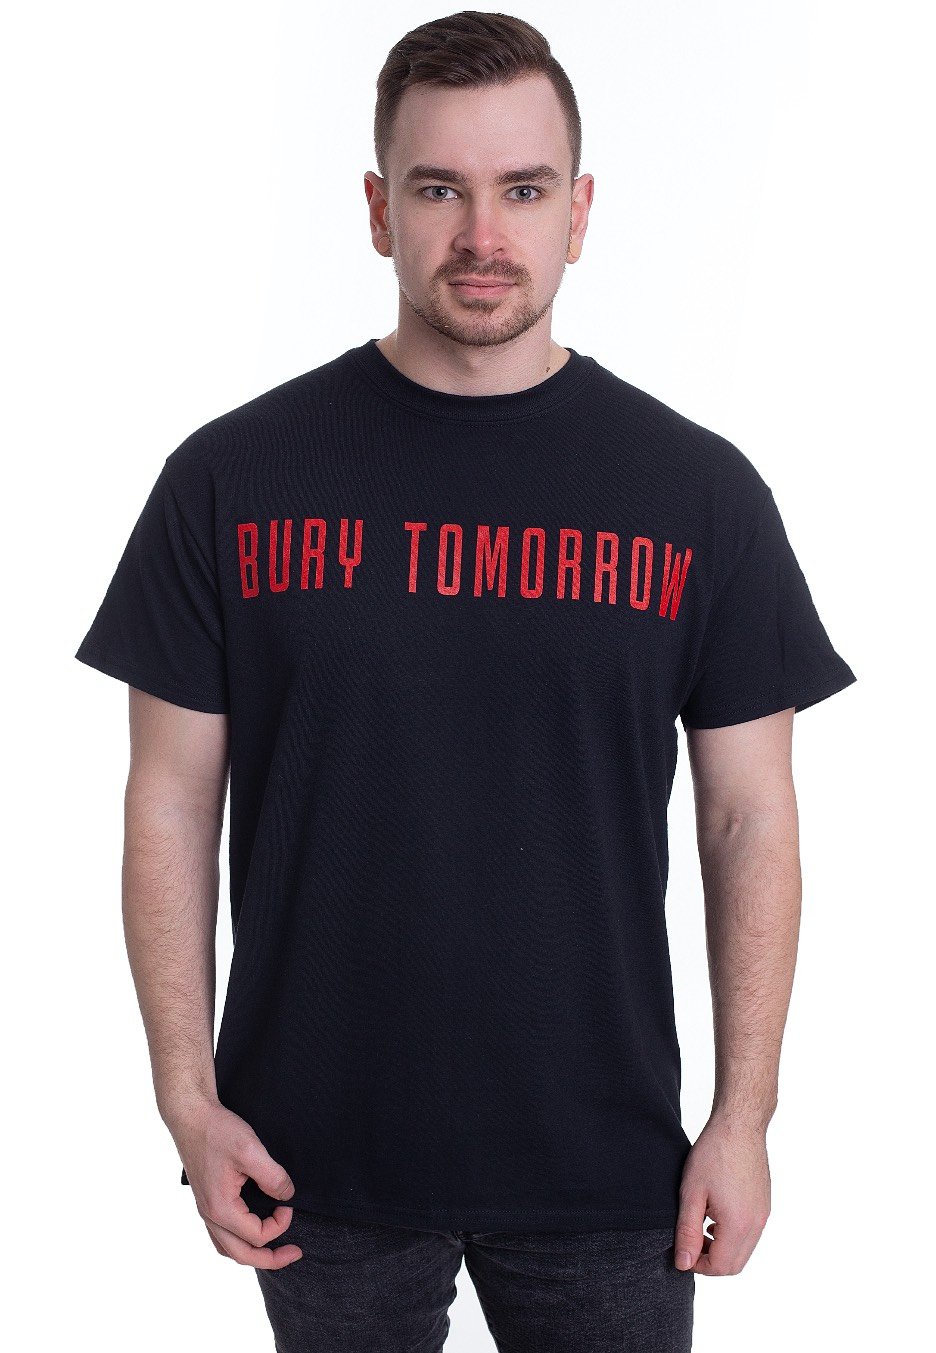 Bury Tomorrow - Restart The Age - T-Shirt